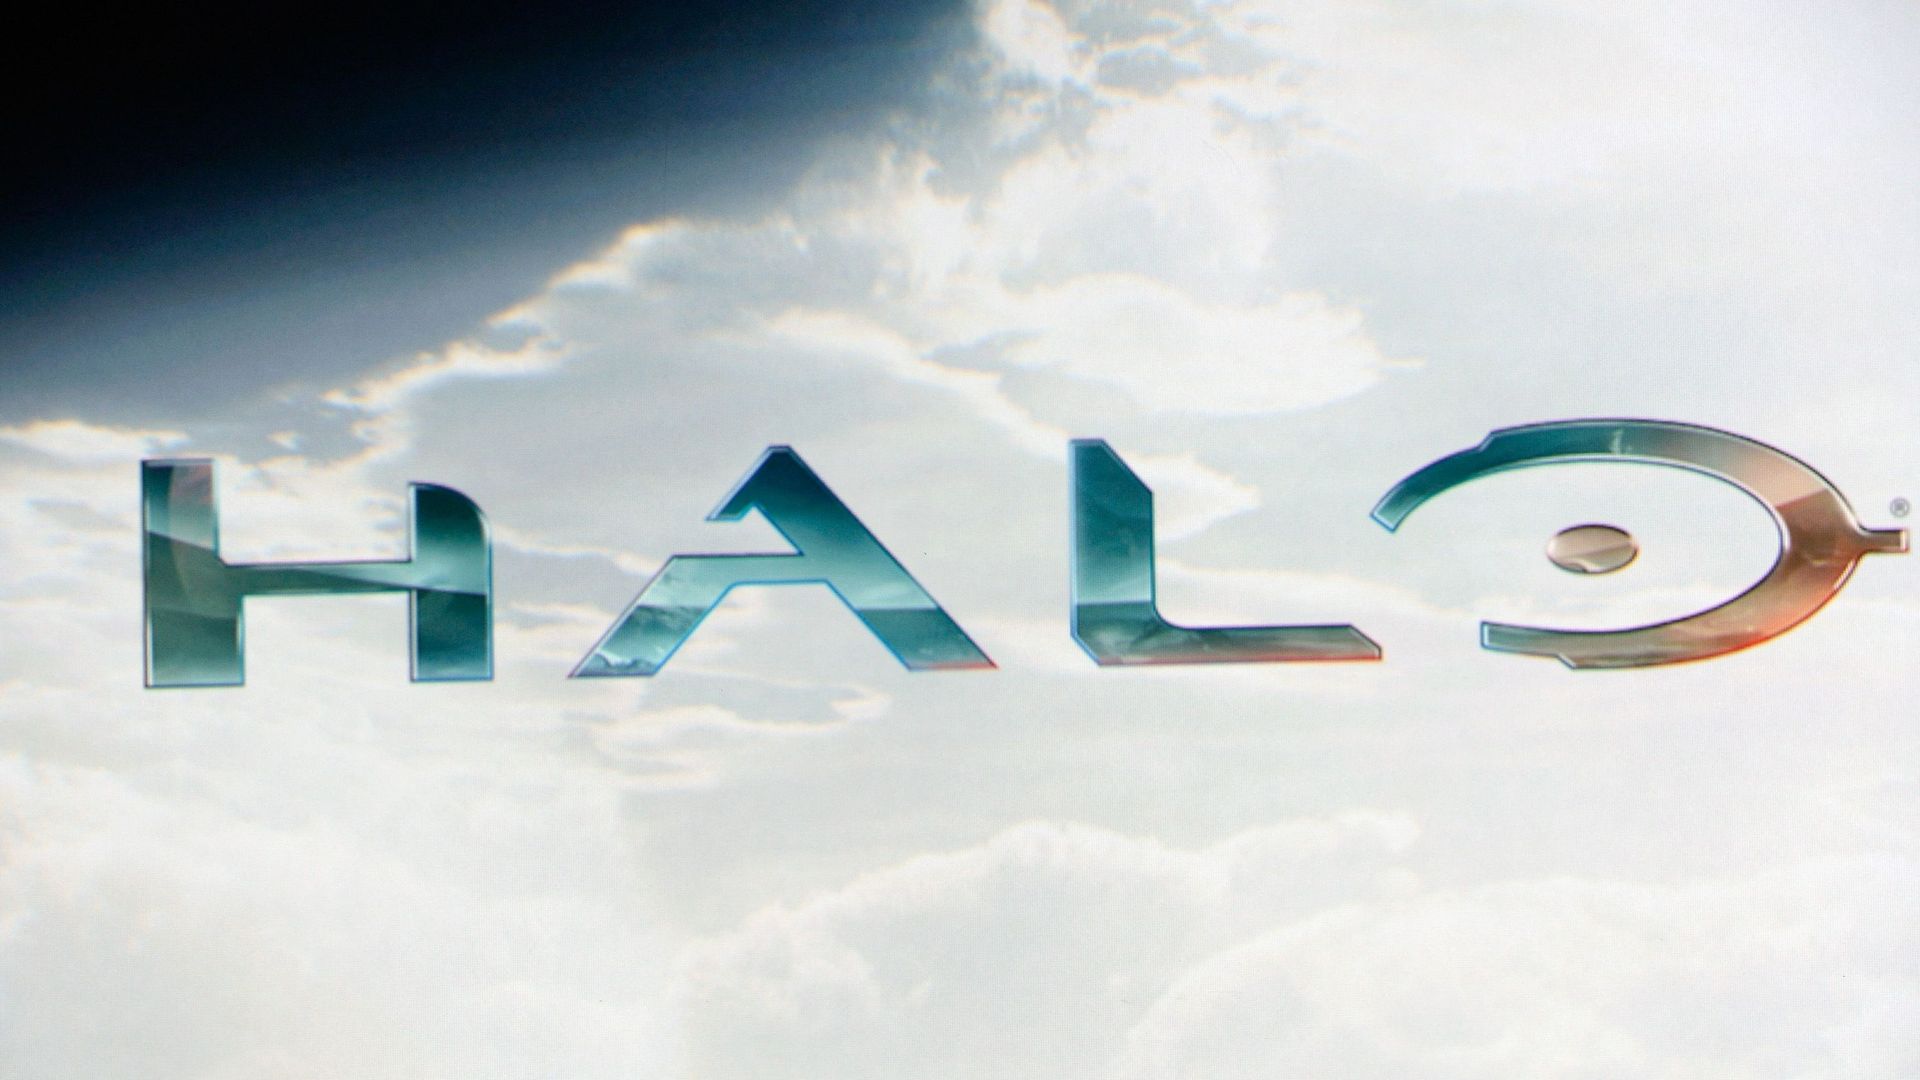 Logo de la franchise Halo